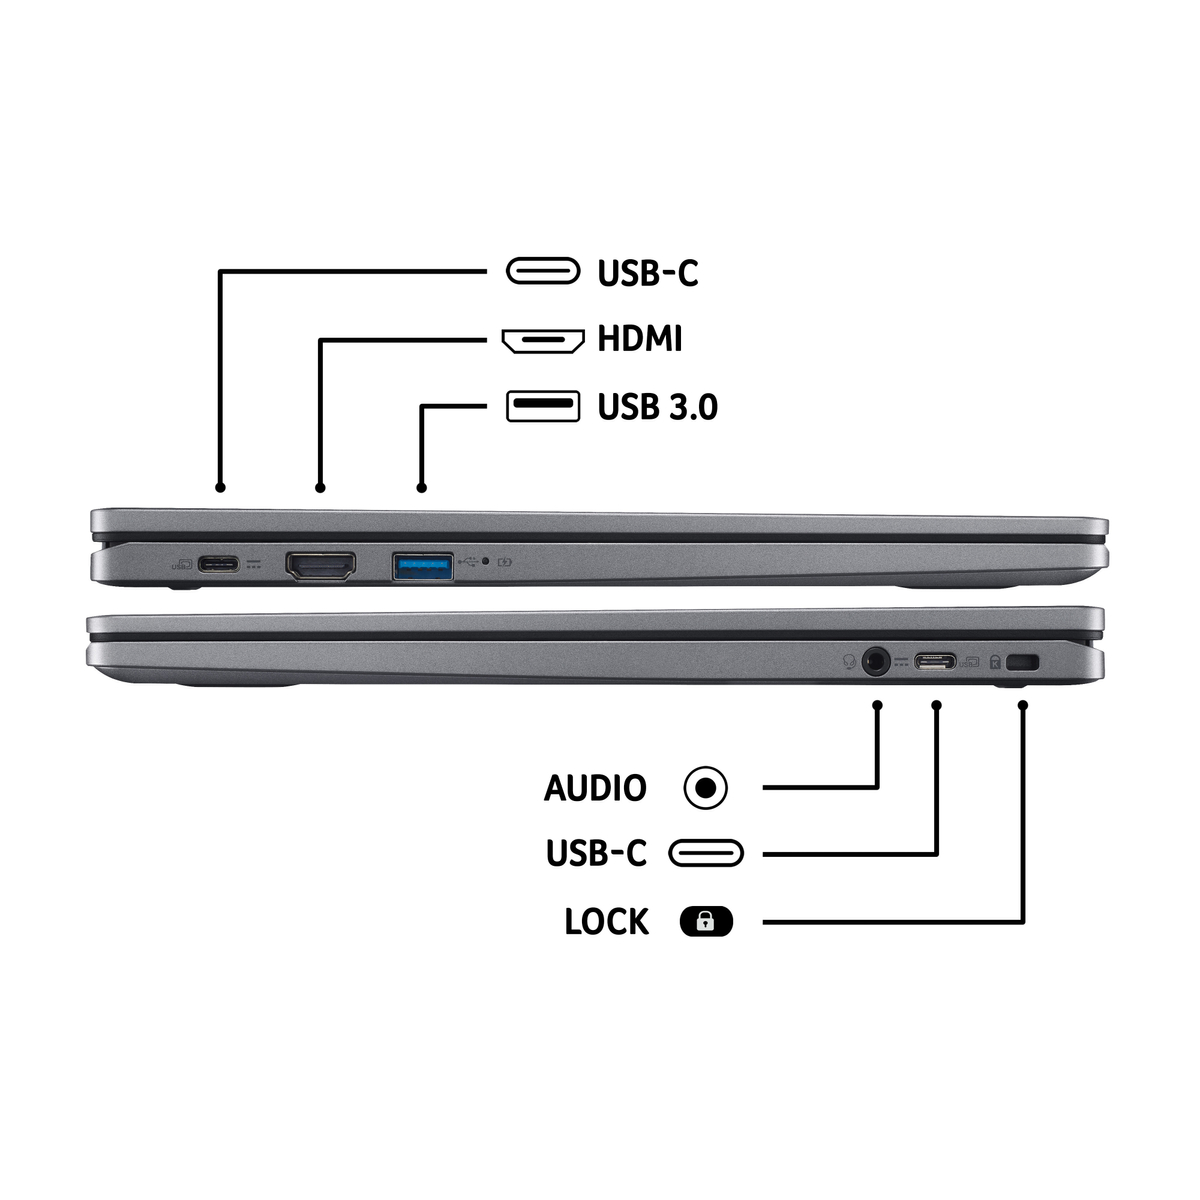 Chromebook 315CB315-4H4GB128GB 15.6